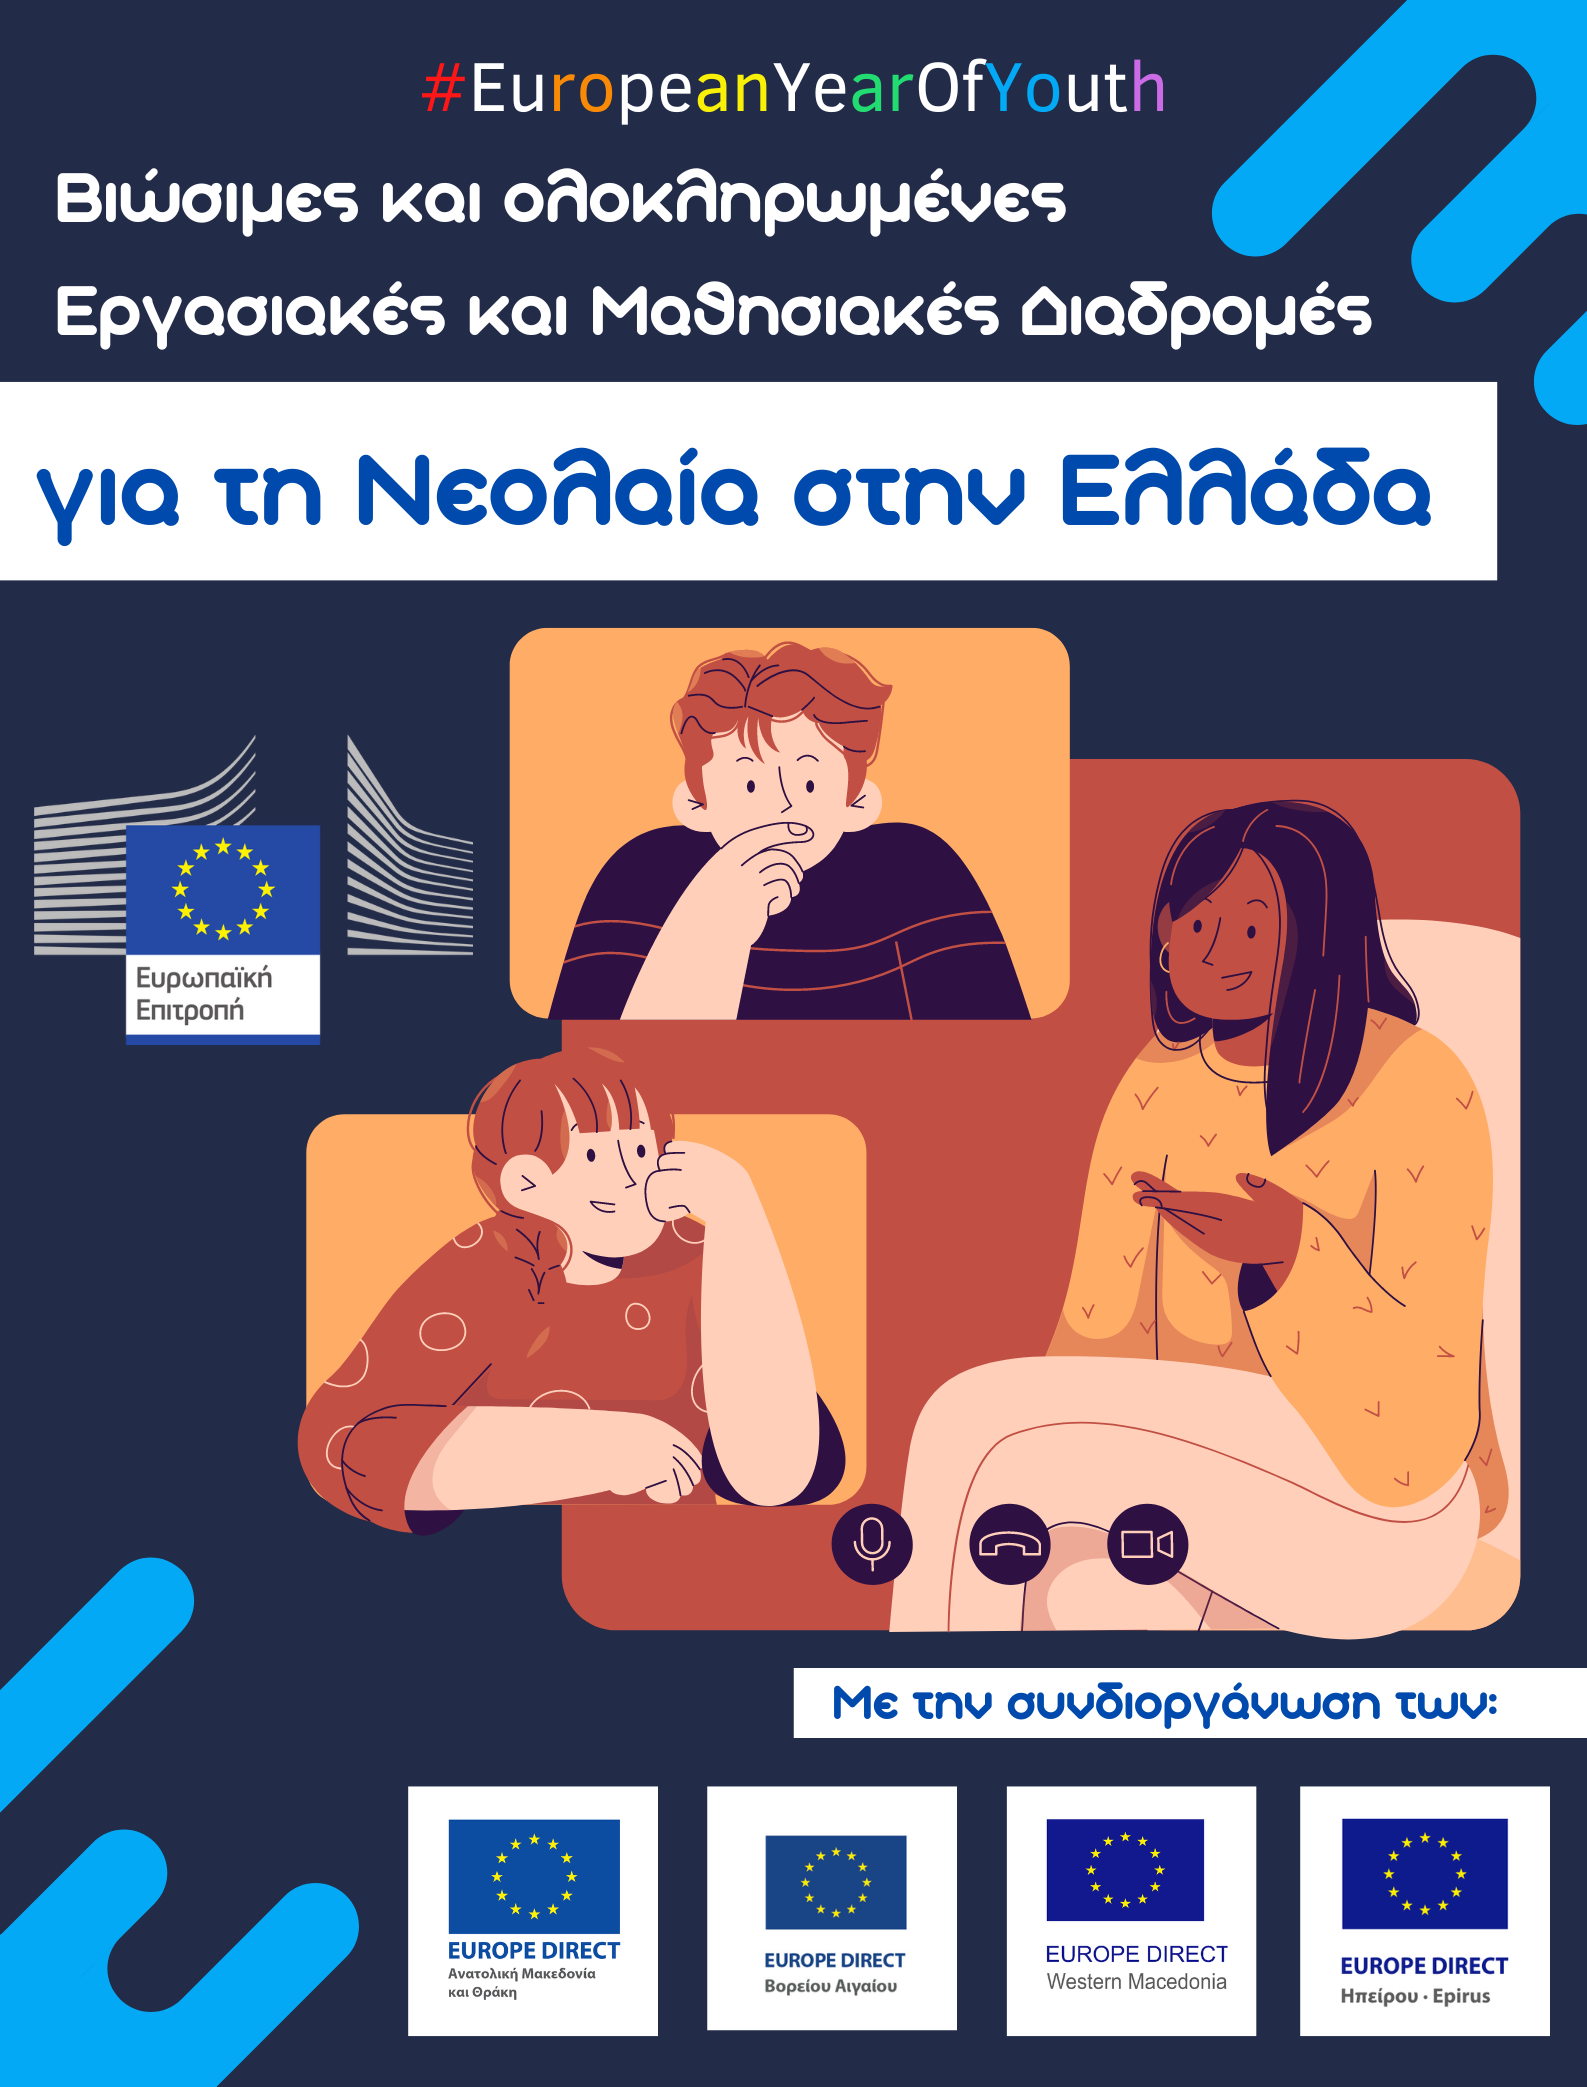  Europe Direct Δυτικής Μακεδονίας: συζήτηση για τις βιώσιμες και ολοκληρωμένες εργασιακές και μαθησιακές διαδρομές για τη νεολαία στην Ελλάδα.